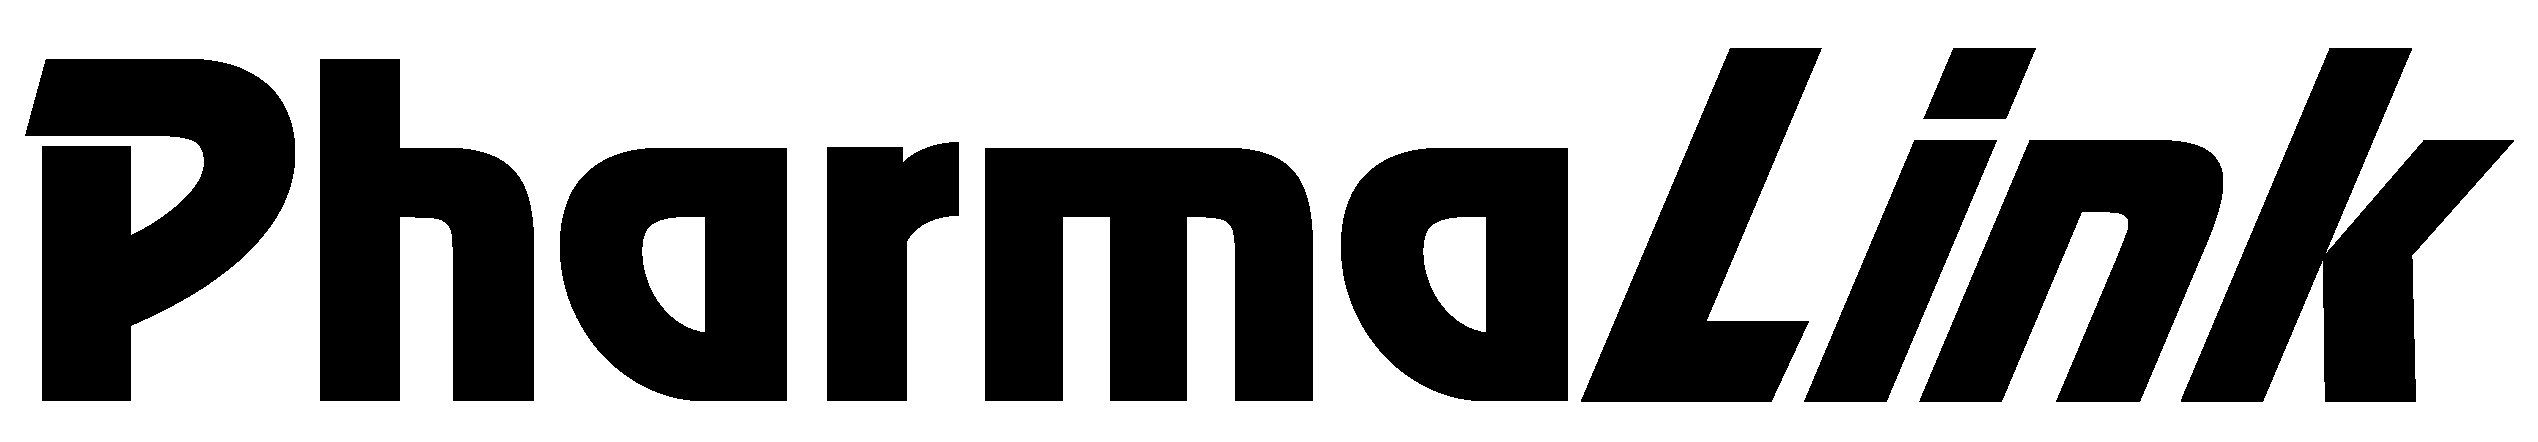 Trademark Logo PHARMALINK